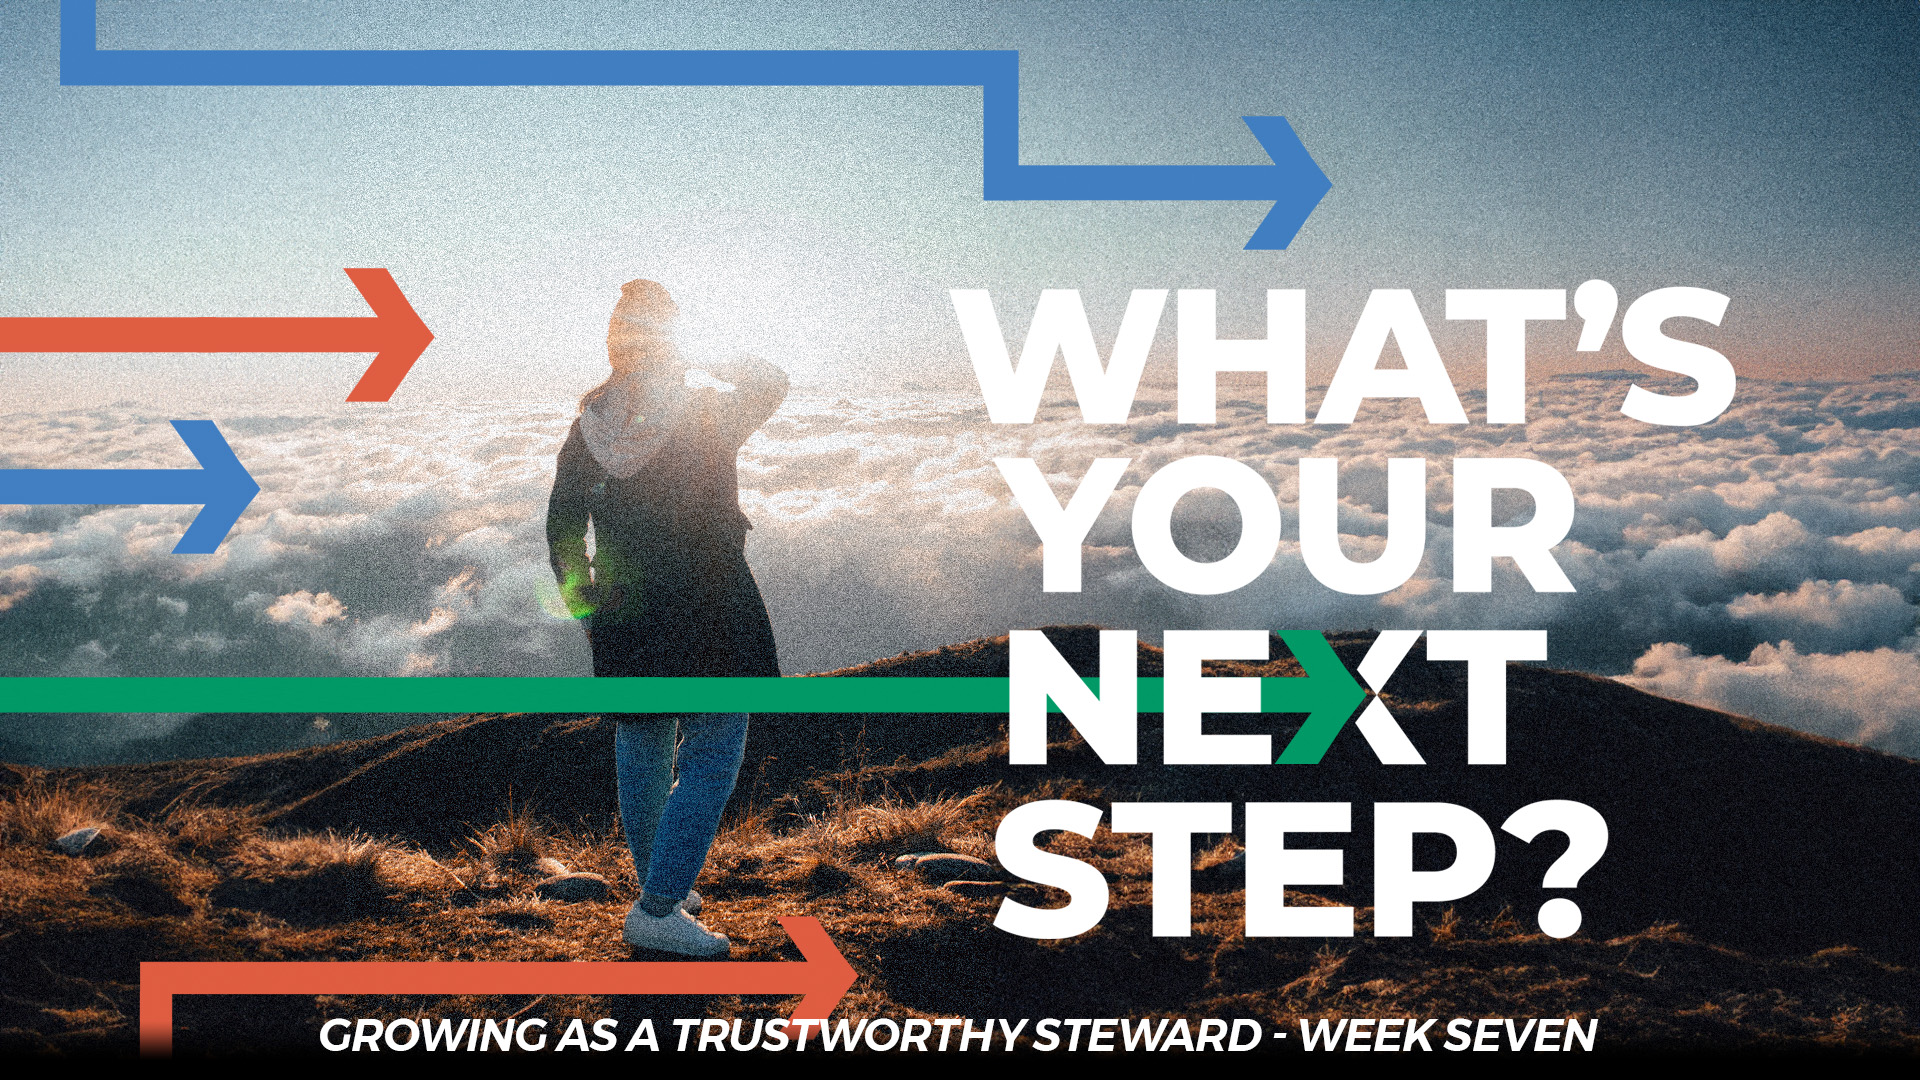 Growing as a Trustworthy Steward - Week Seven